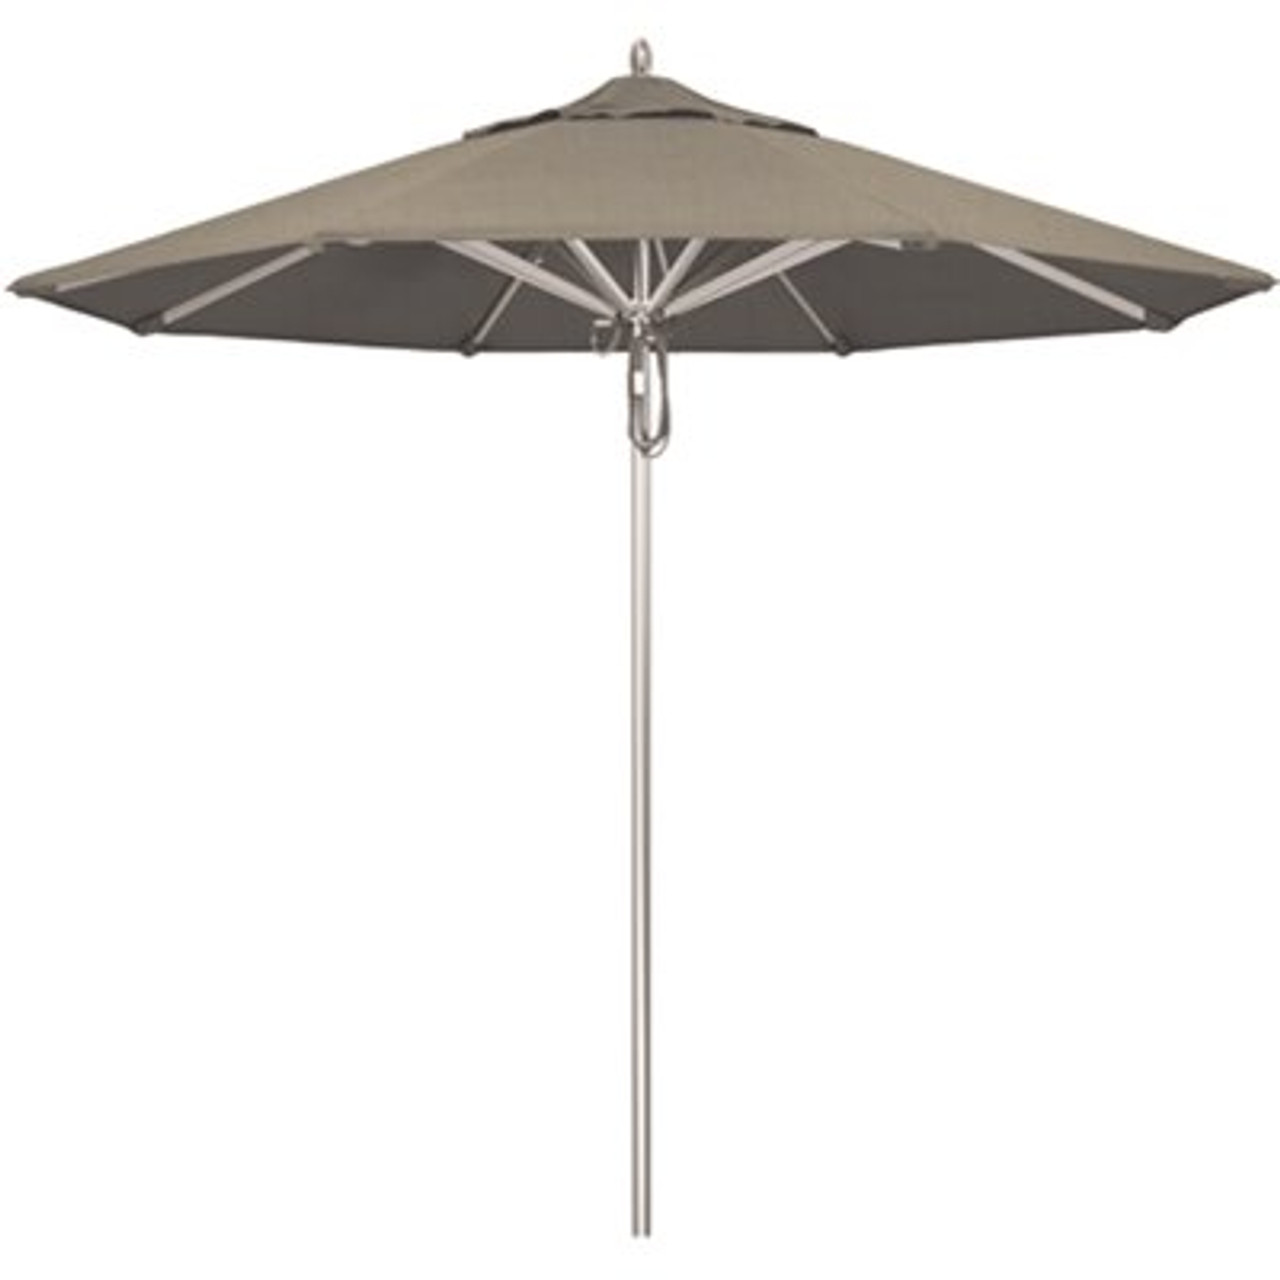 California Umbrella 9 ft. Silver Aluminum Commercial Market Patio Umbrella with Pulley Lift in Spectrum Dove Sunbrella